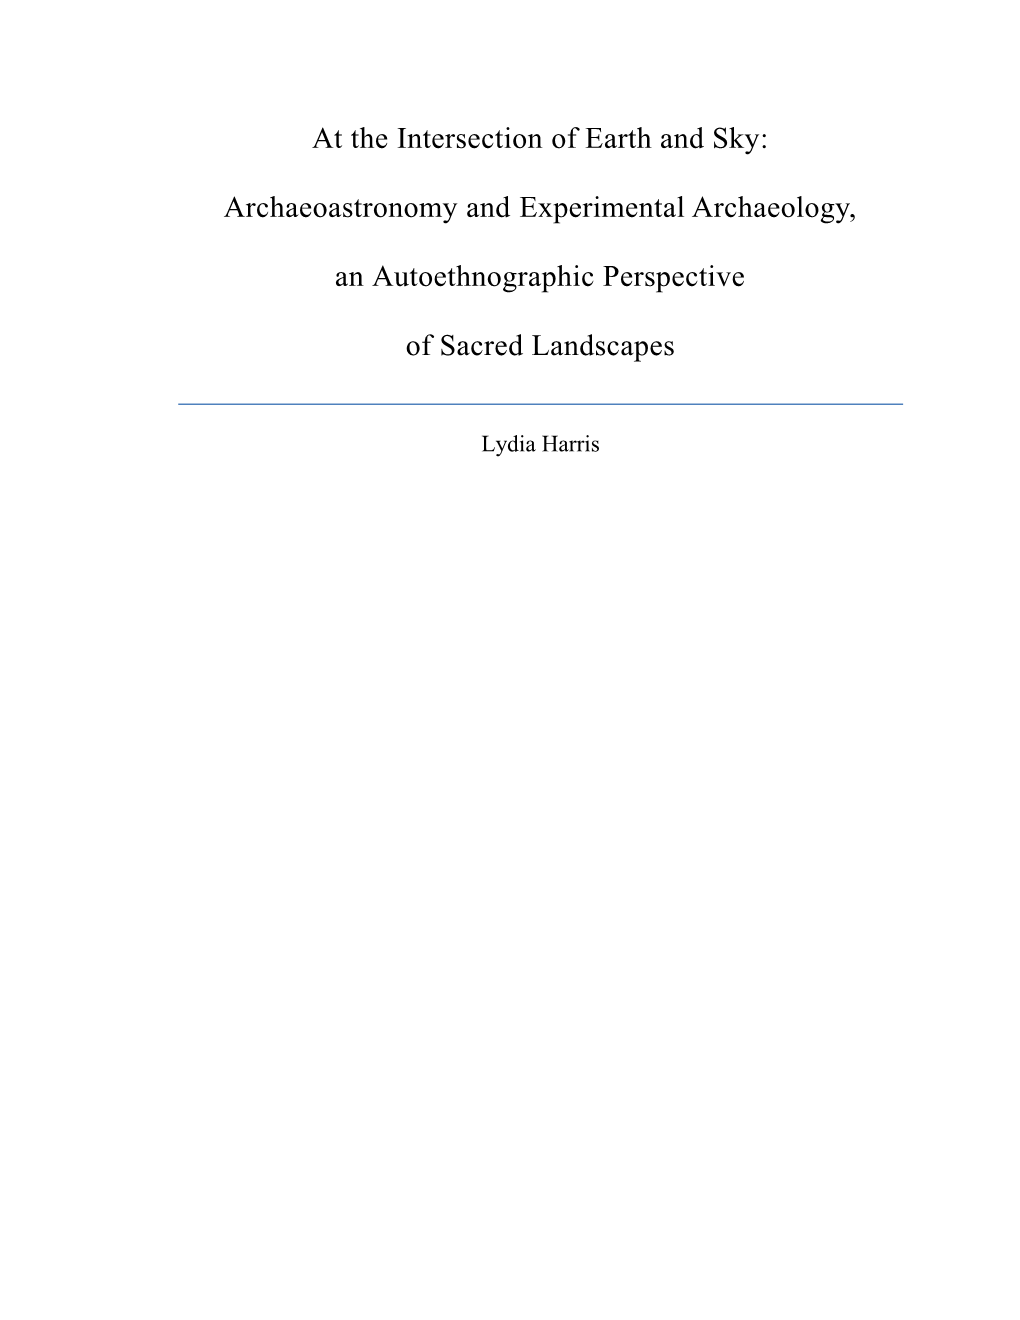 Archaeoastronomy and Experimental Archaeology